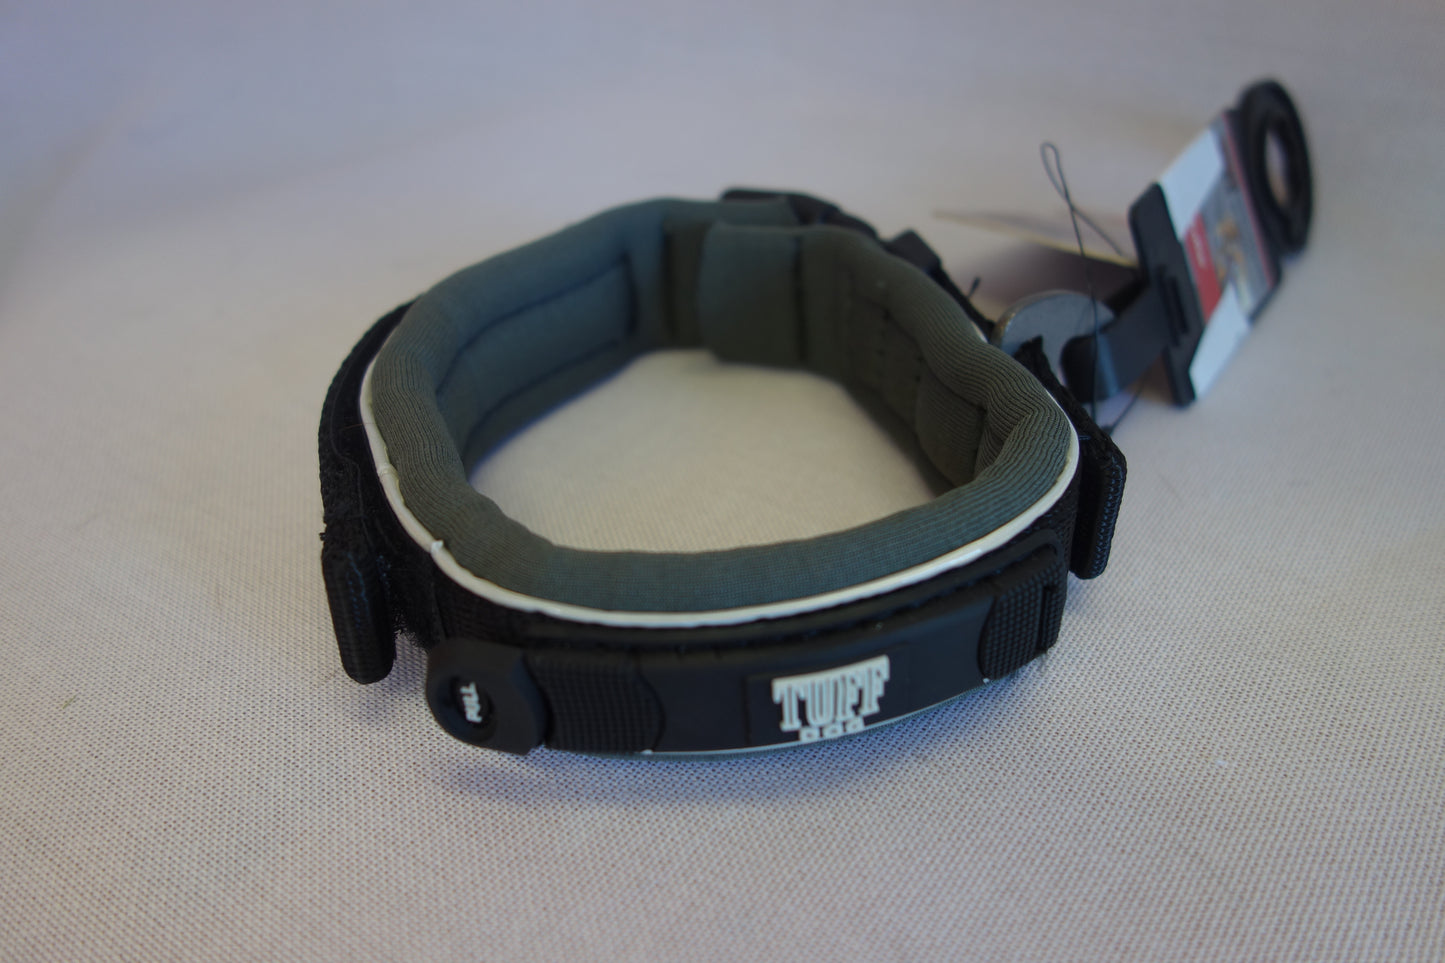 Black Tuff Dog Trek Collar - Wanneroo Stockfeeders